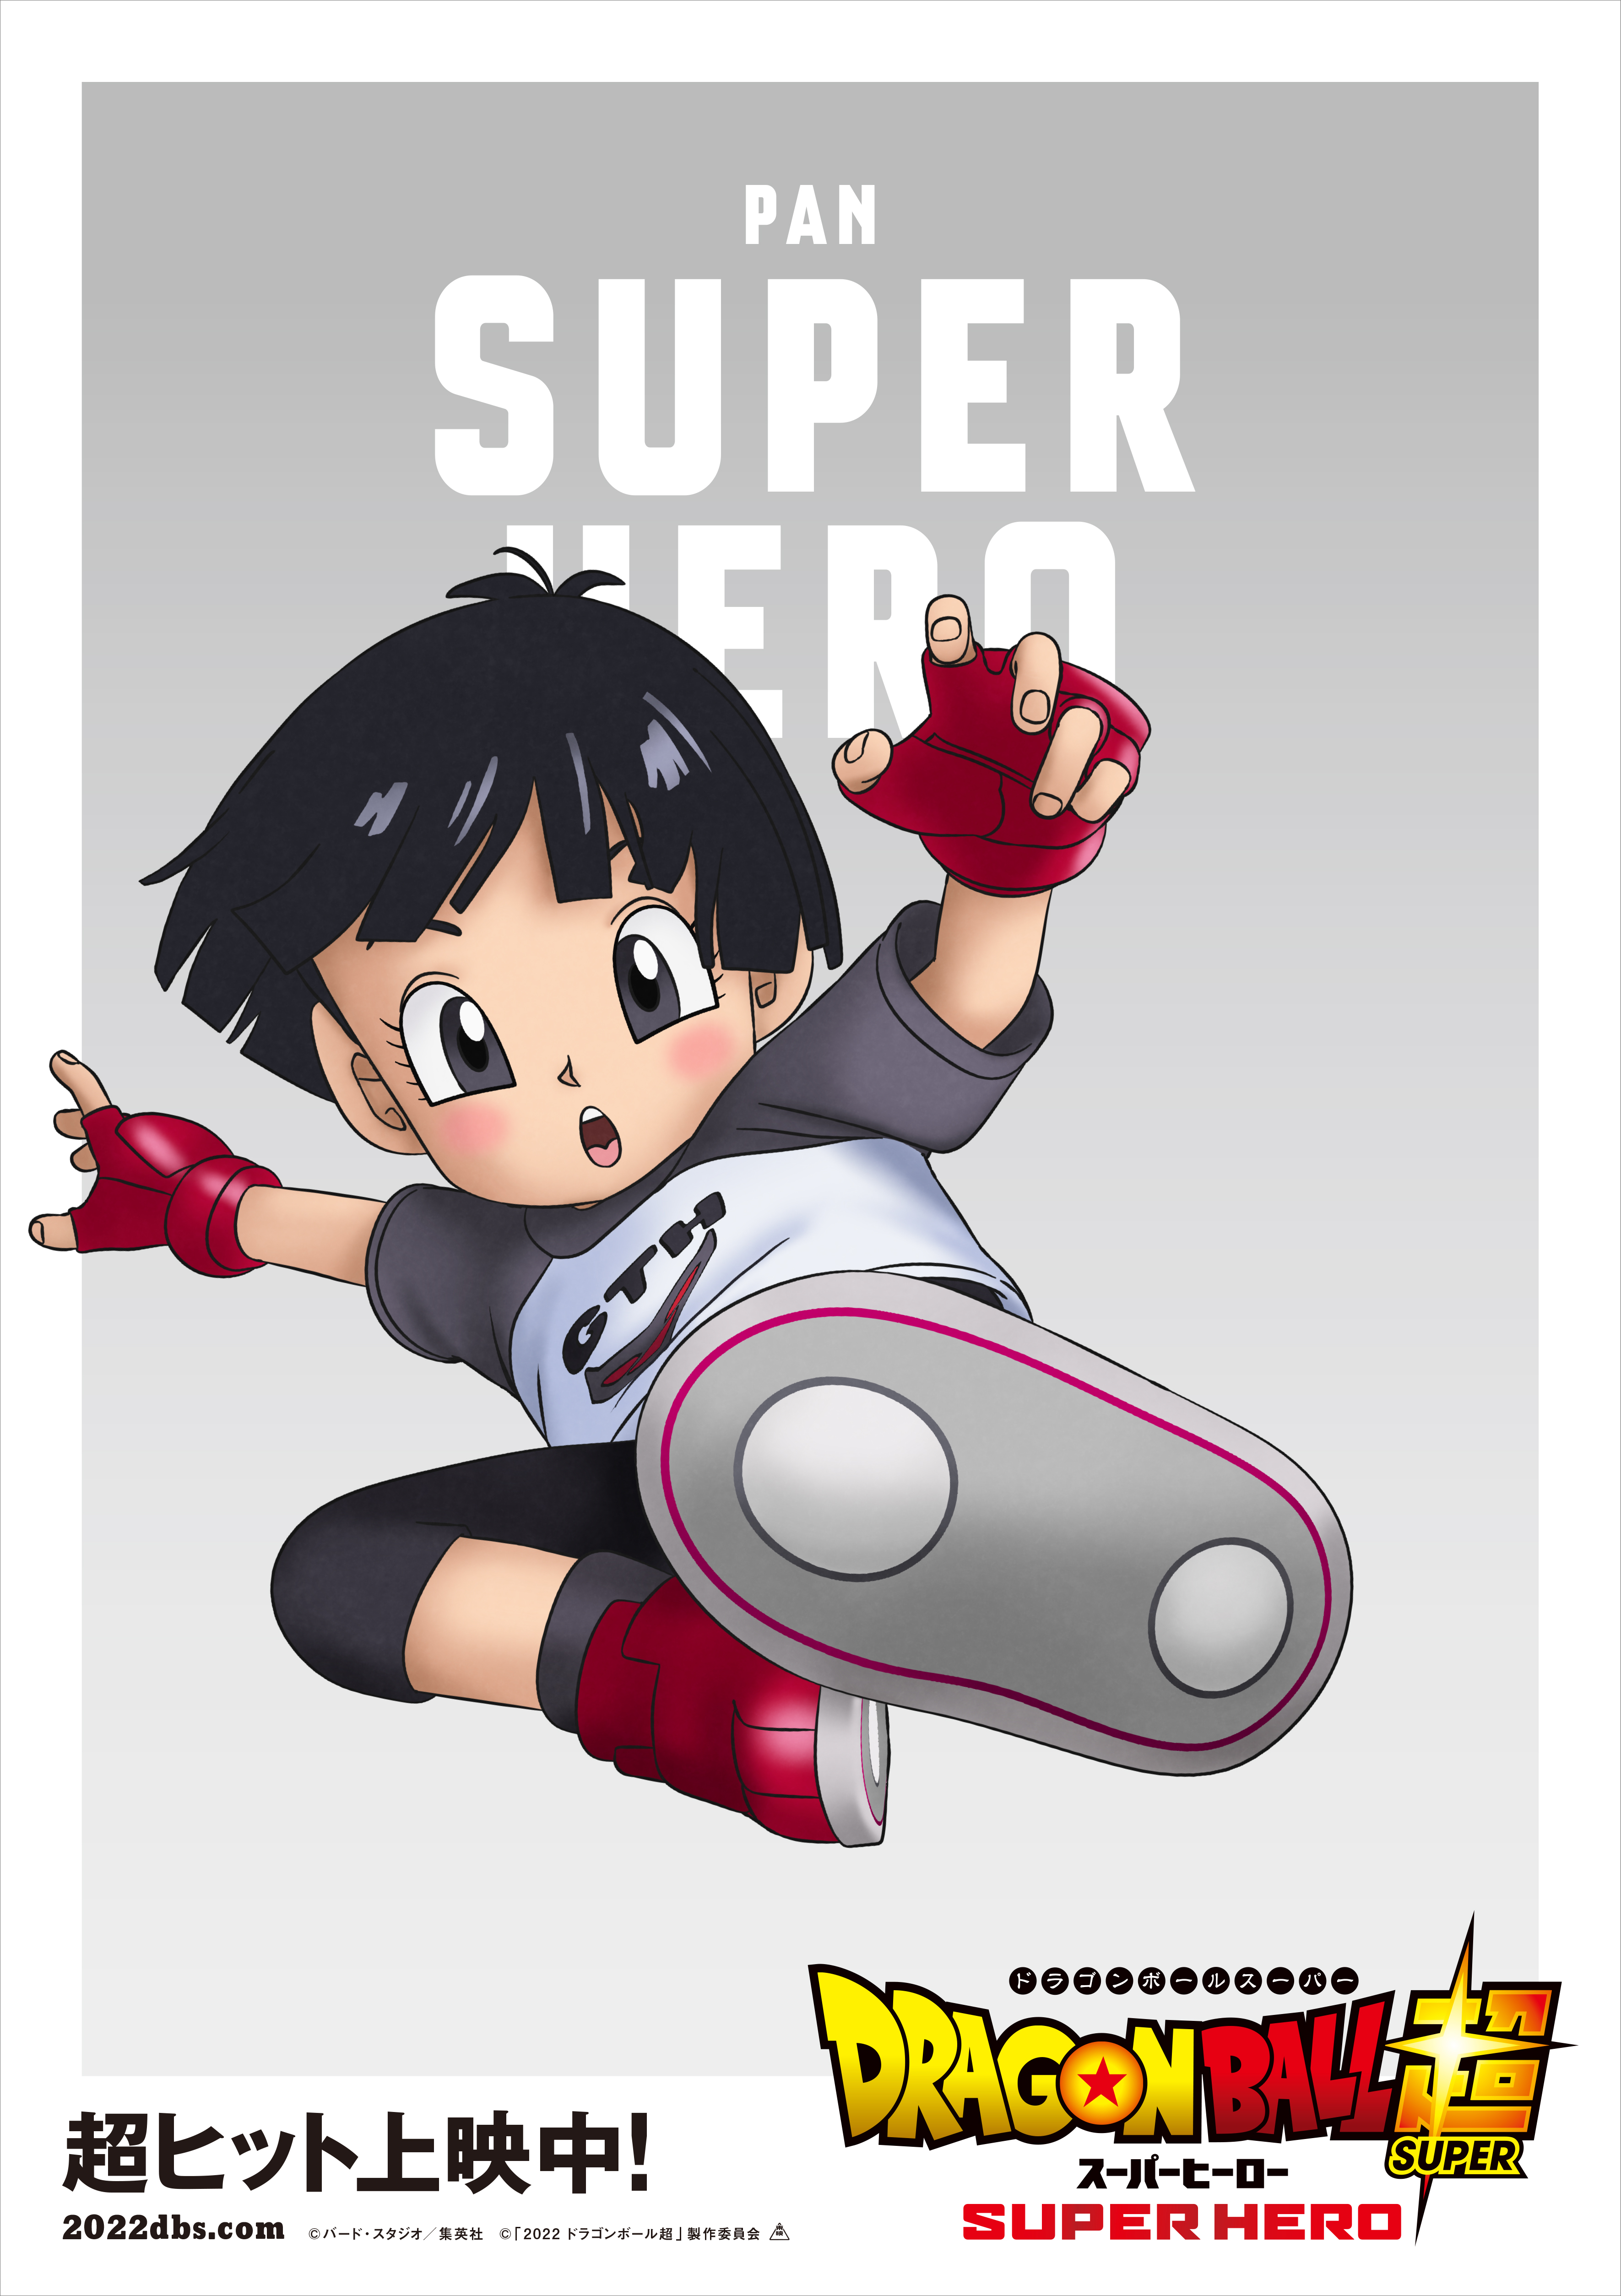 Pan SSJ Dragon Ball Super : Super Hero by d4nartss on DeviantArt